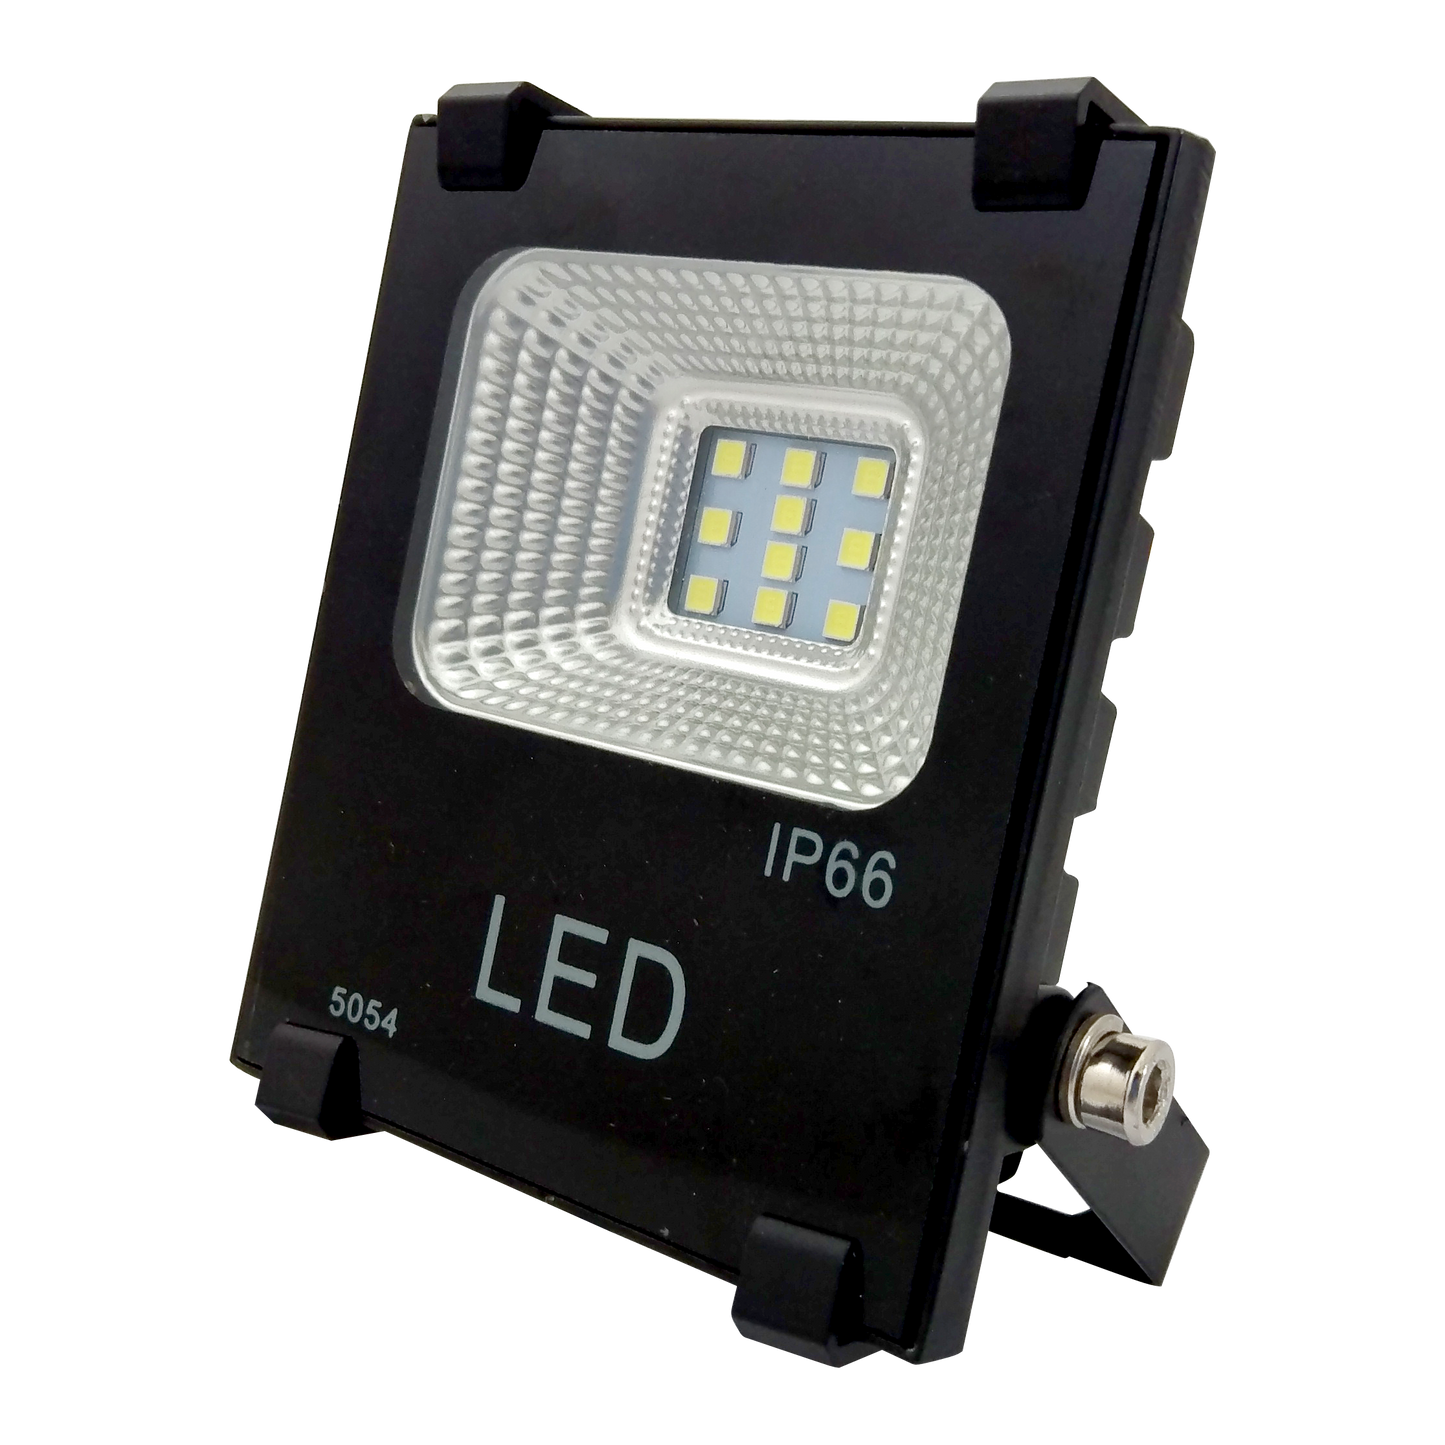 LED 10W SMD超薄投光燈